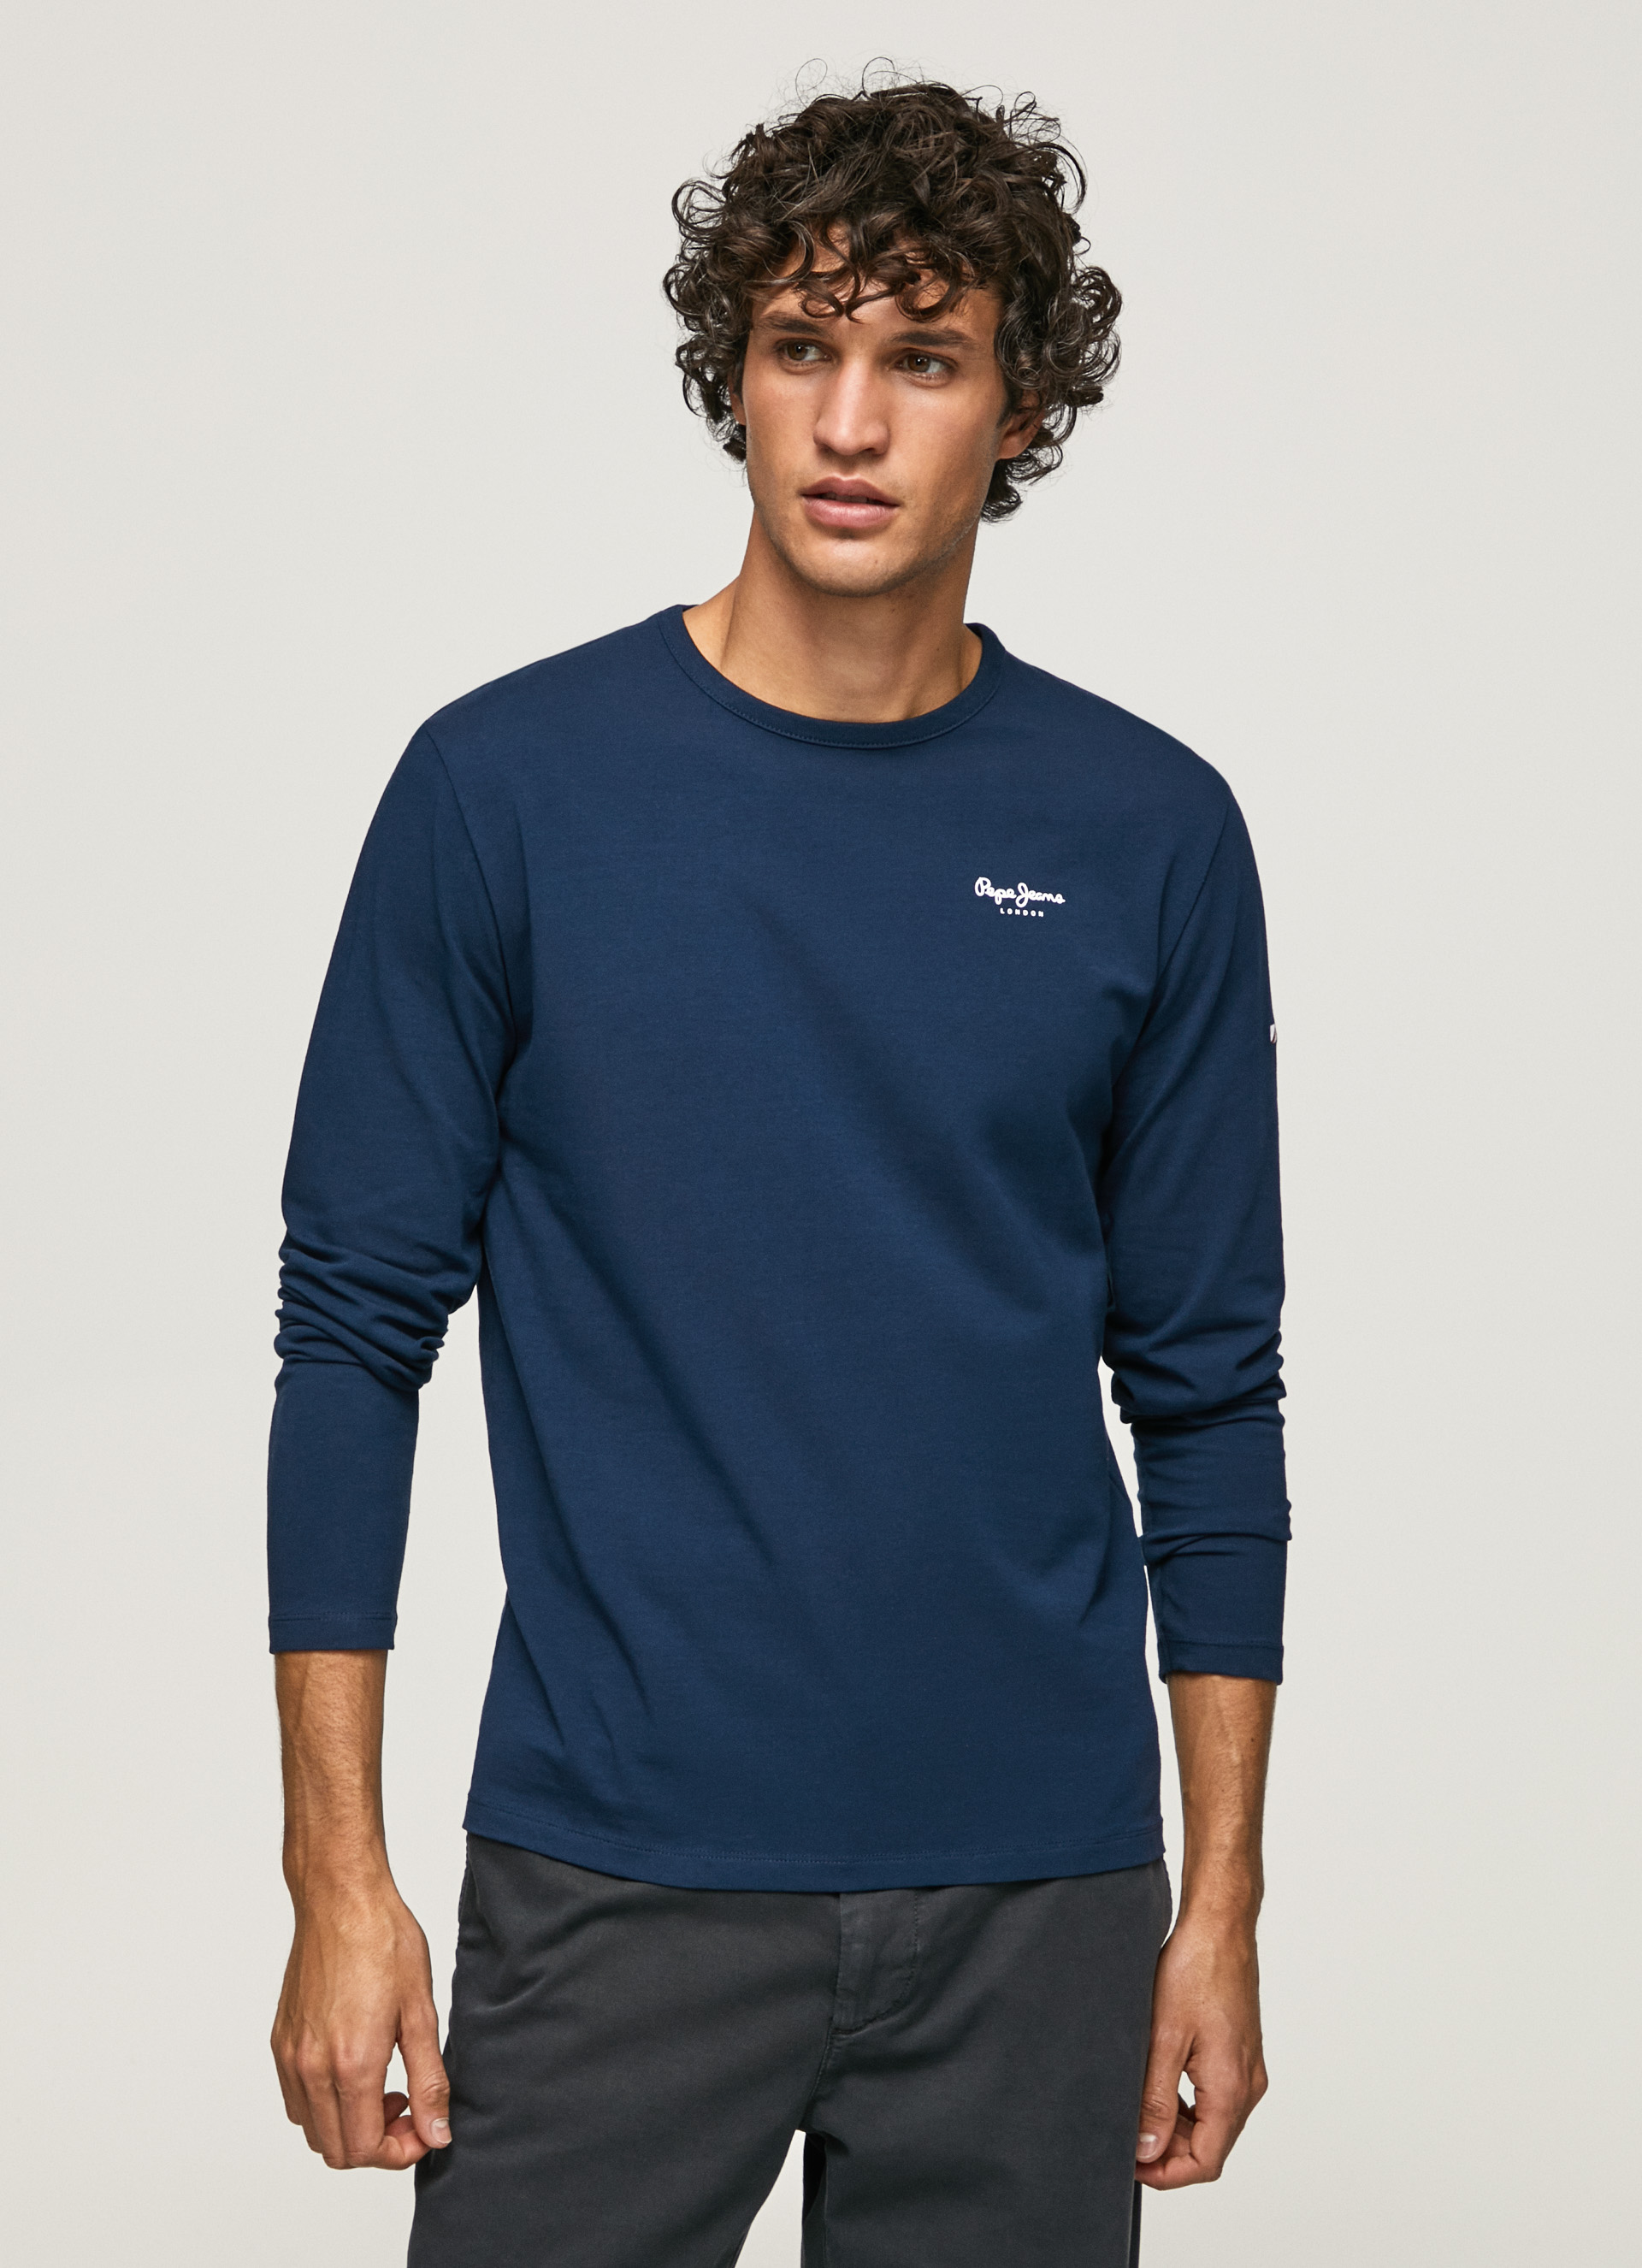 Langarm-T-Shirt Aus Baumwolle | Pepe Jeans